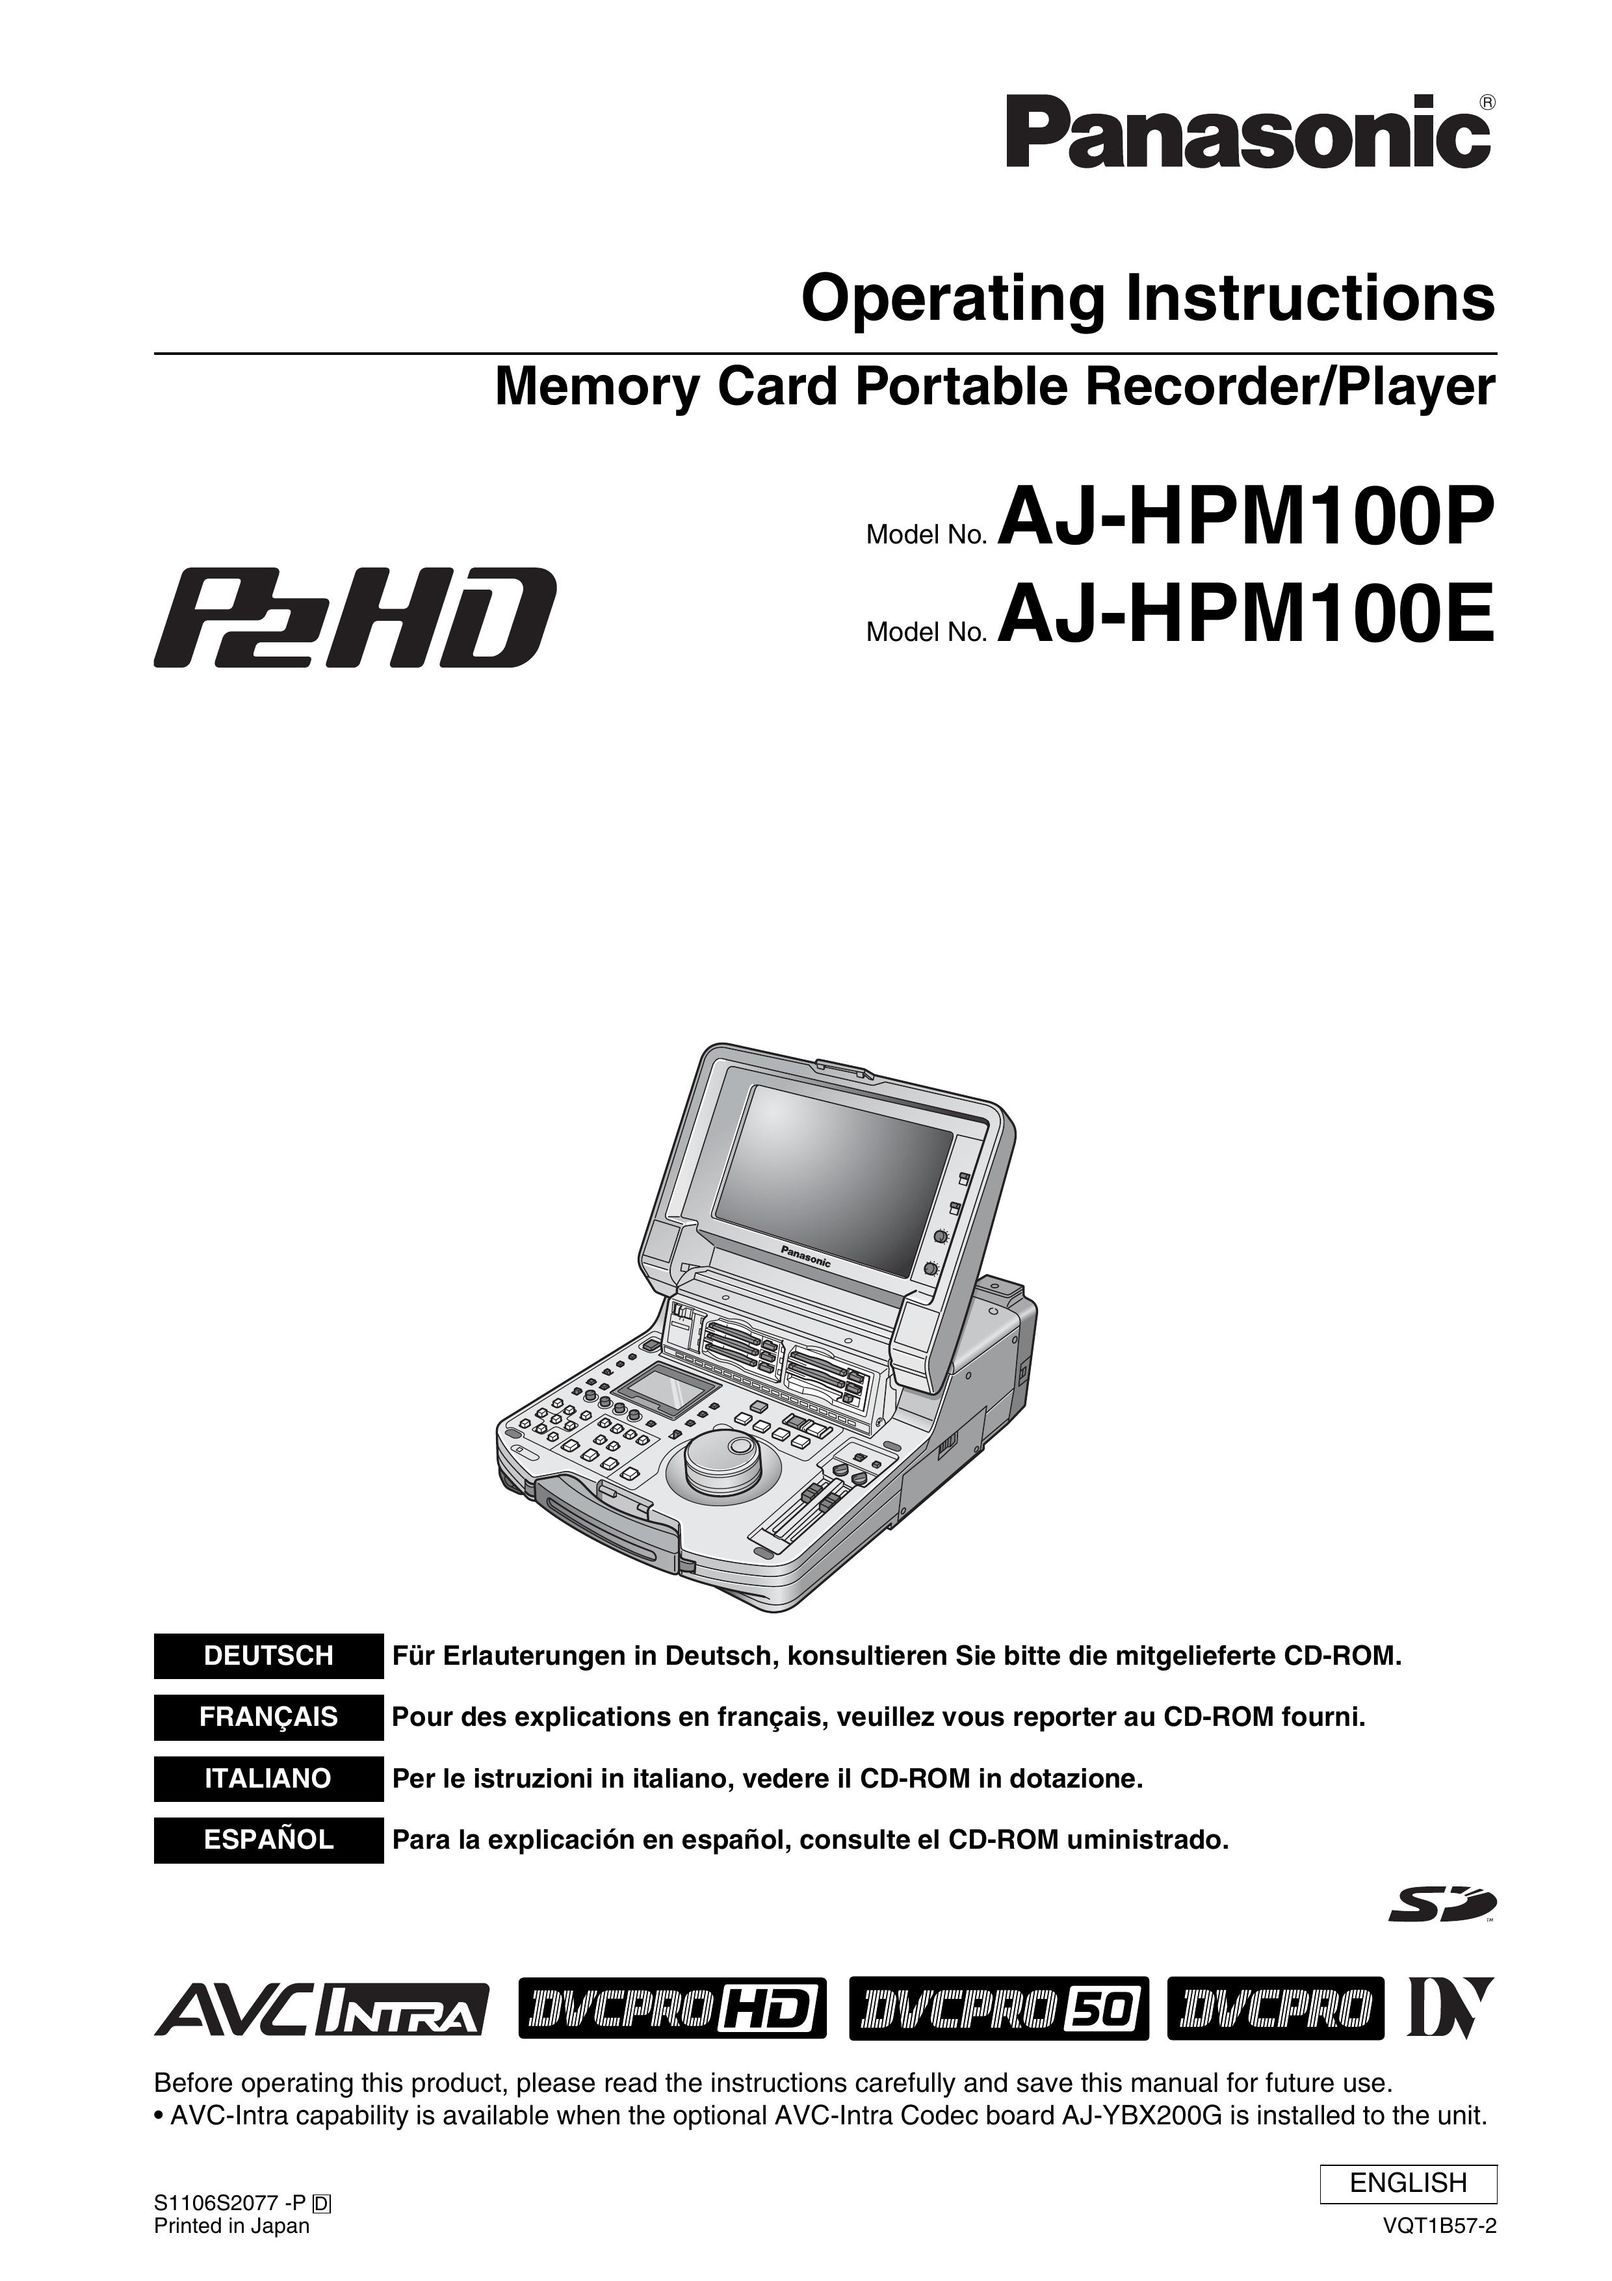 Panasonic AJ-HPM100P Portable DVD Player User Manual